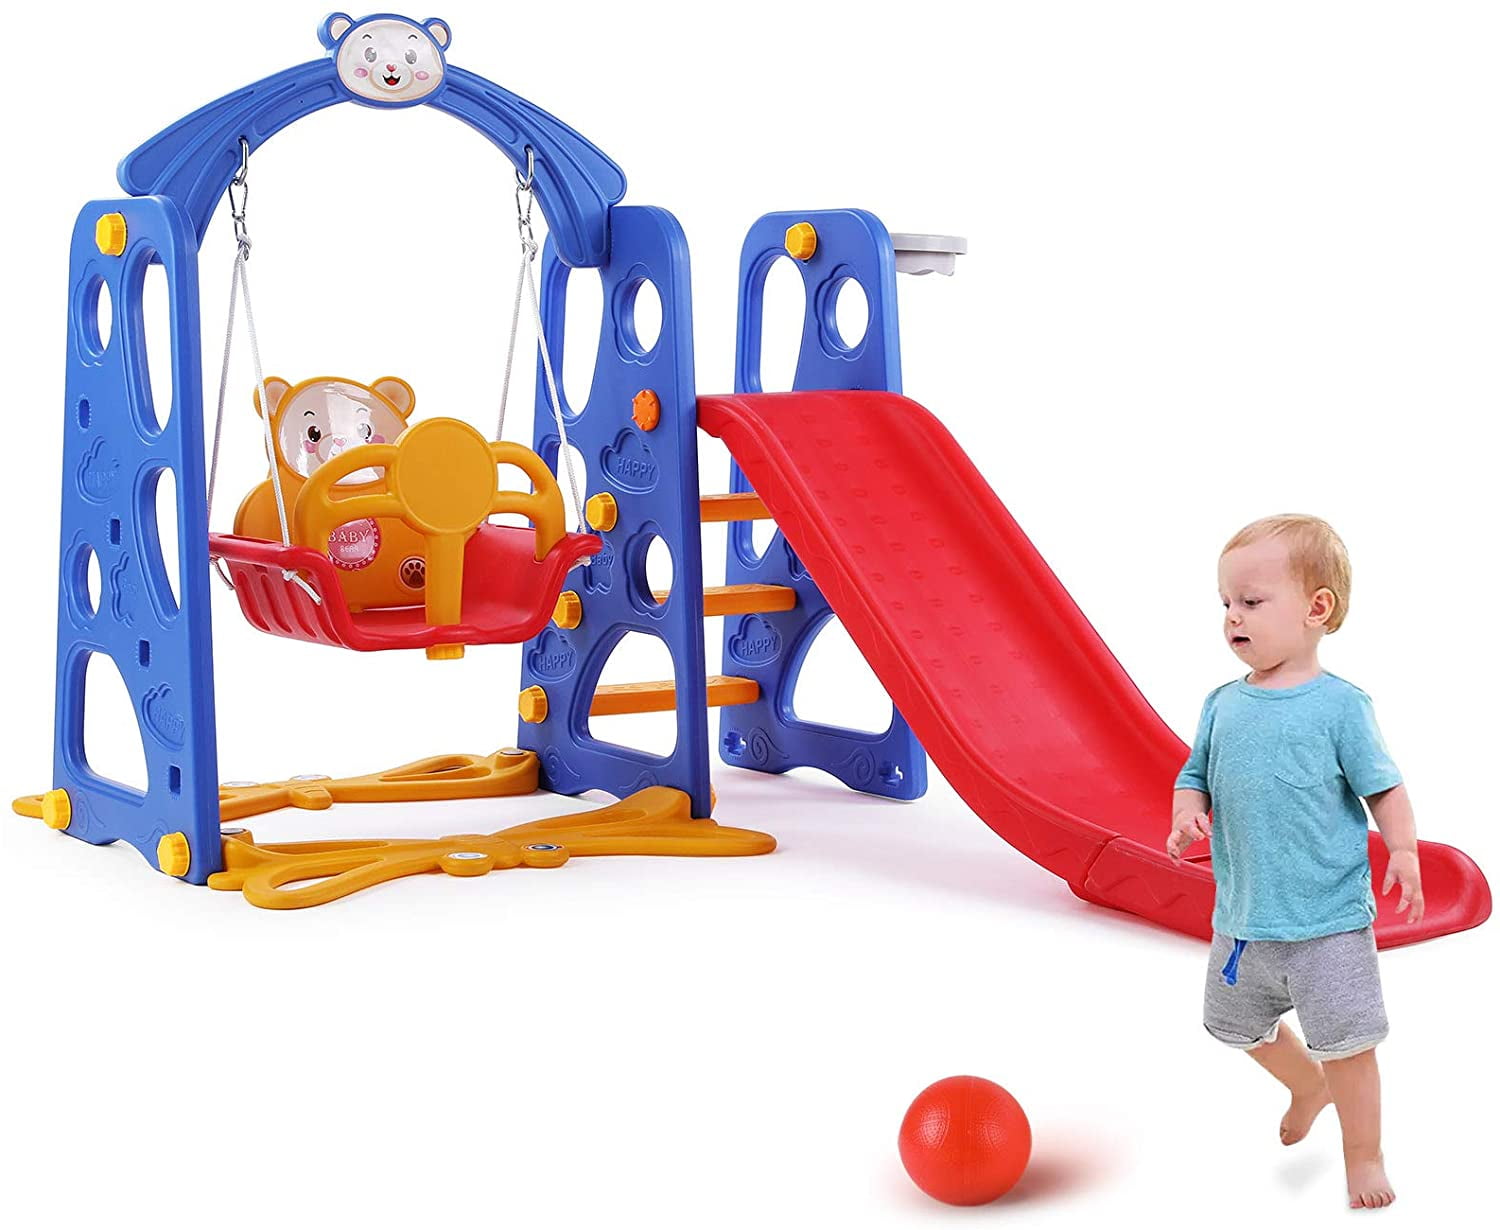 Kids Slide Swing Set Toddler Climber Playground Sturdy Baby Slipping Slide Gifts 